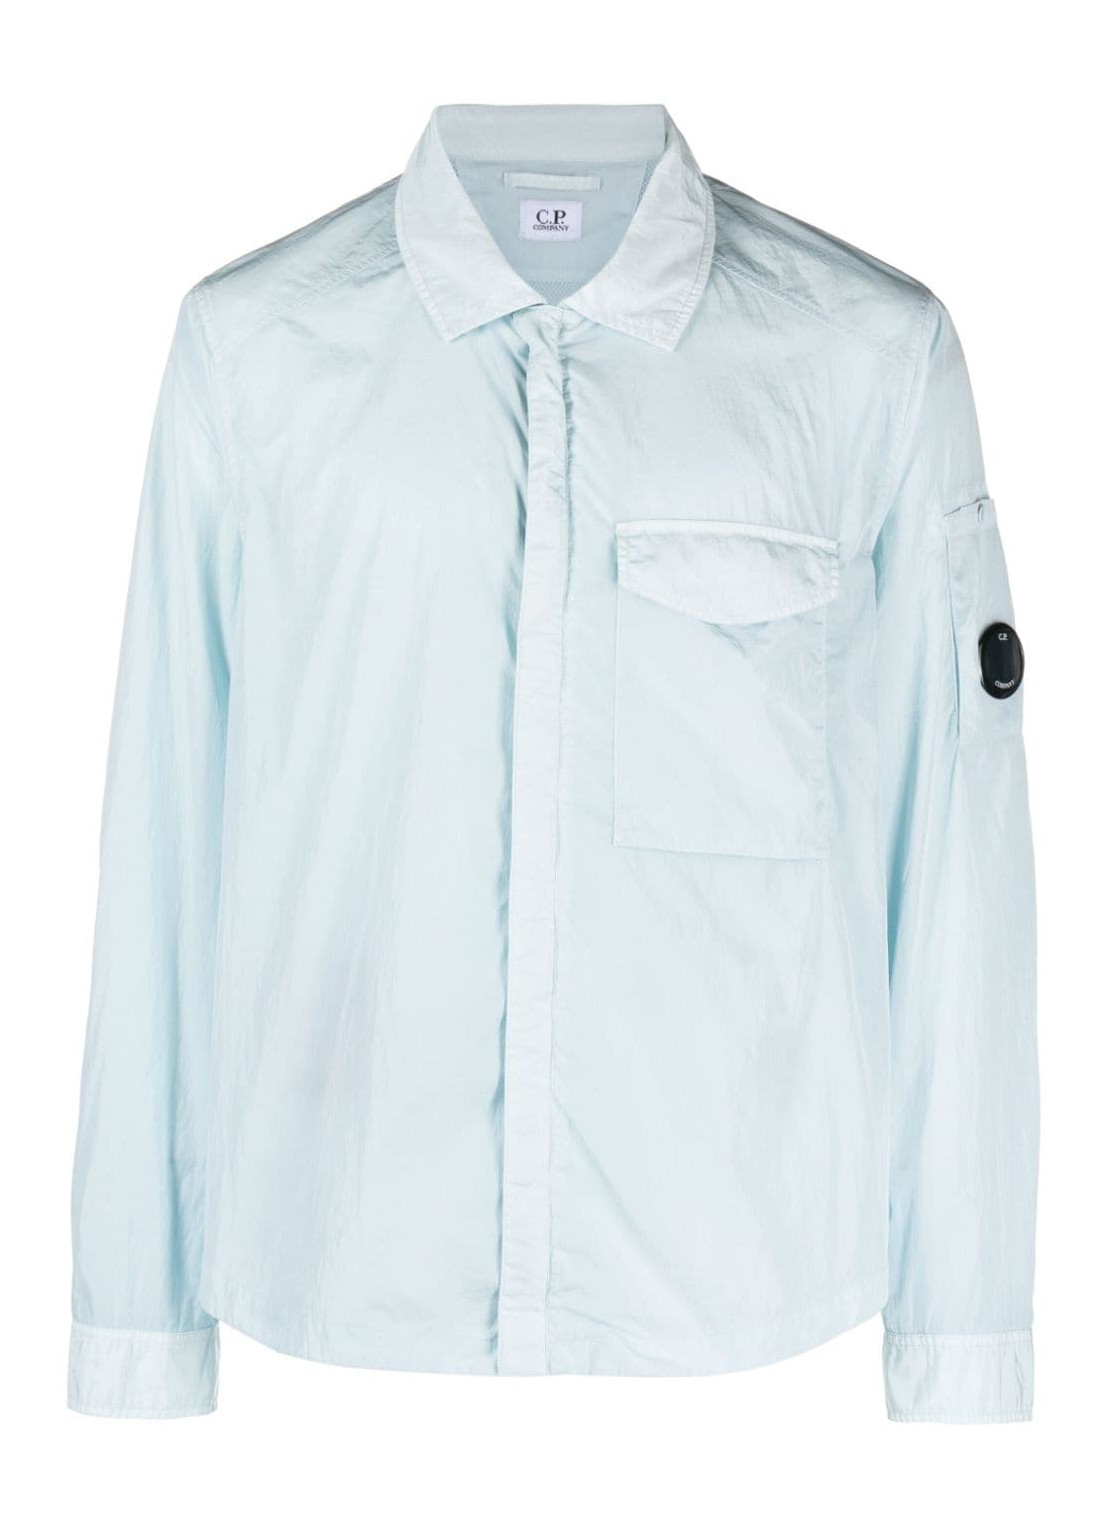 Outerwear c.p.company outerwear man chrome-r pocket overshirt 16cmos039a005904g 806 talla M
 